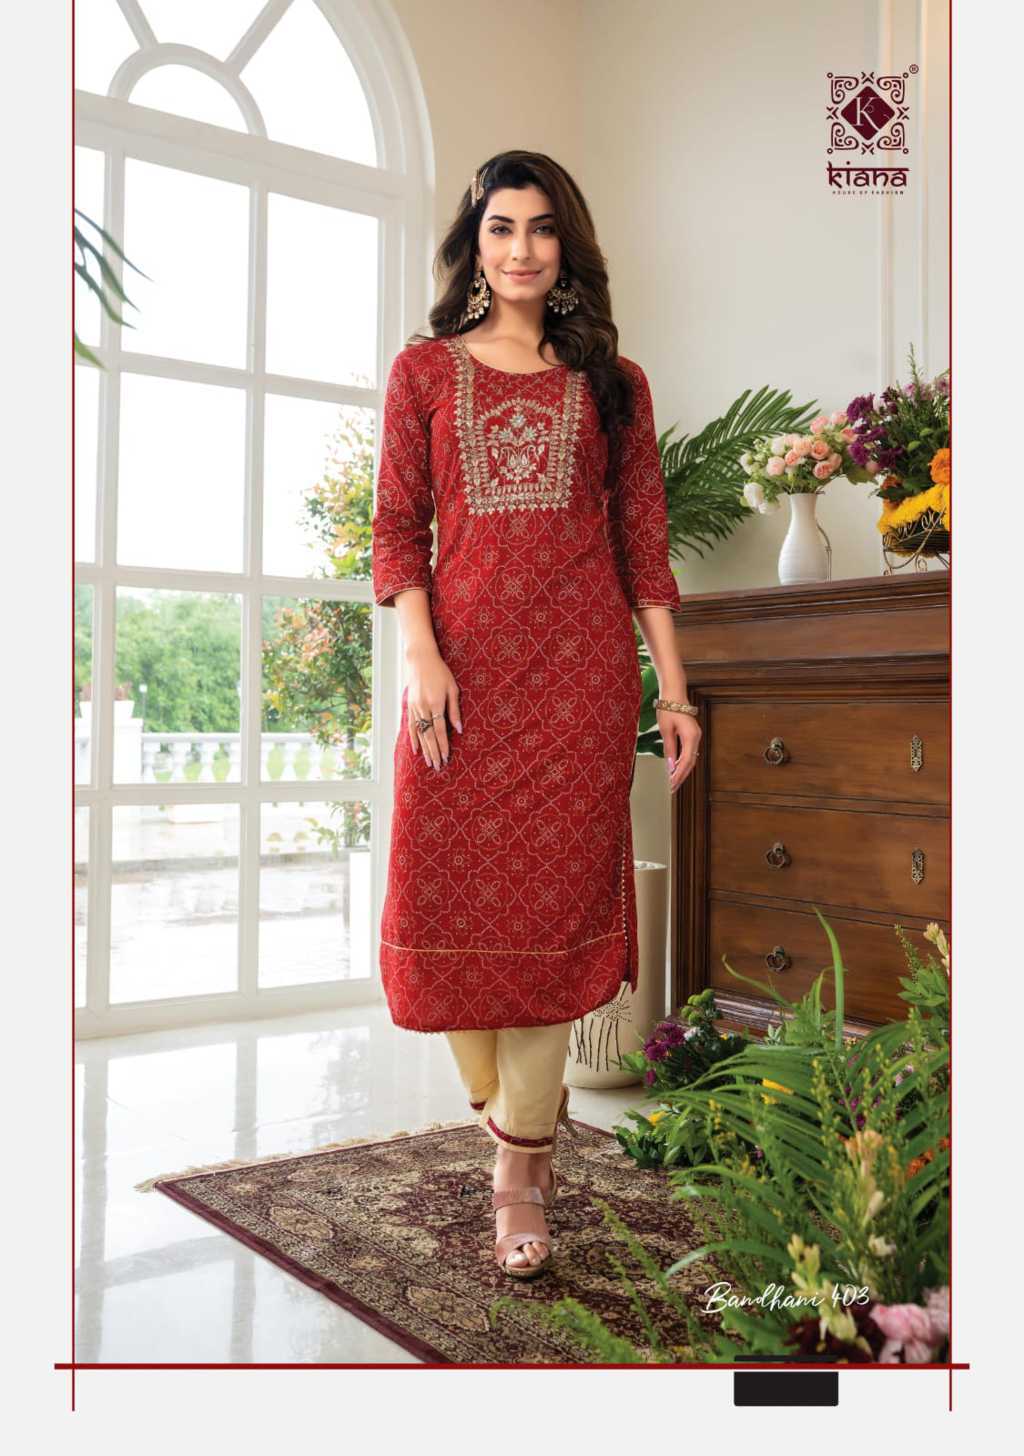 Discover 128+ red bandhani kurti latest